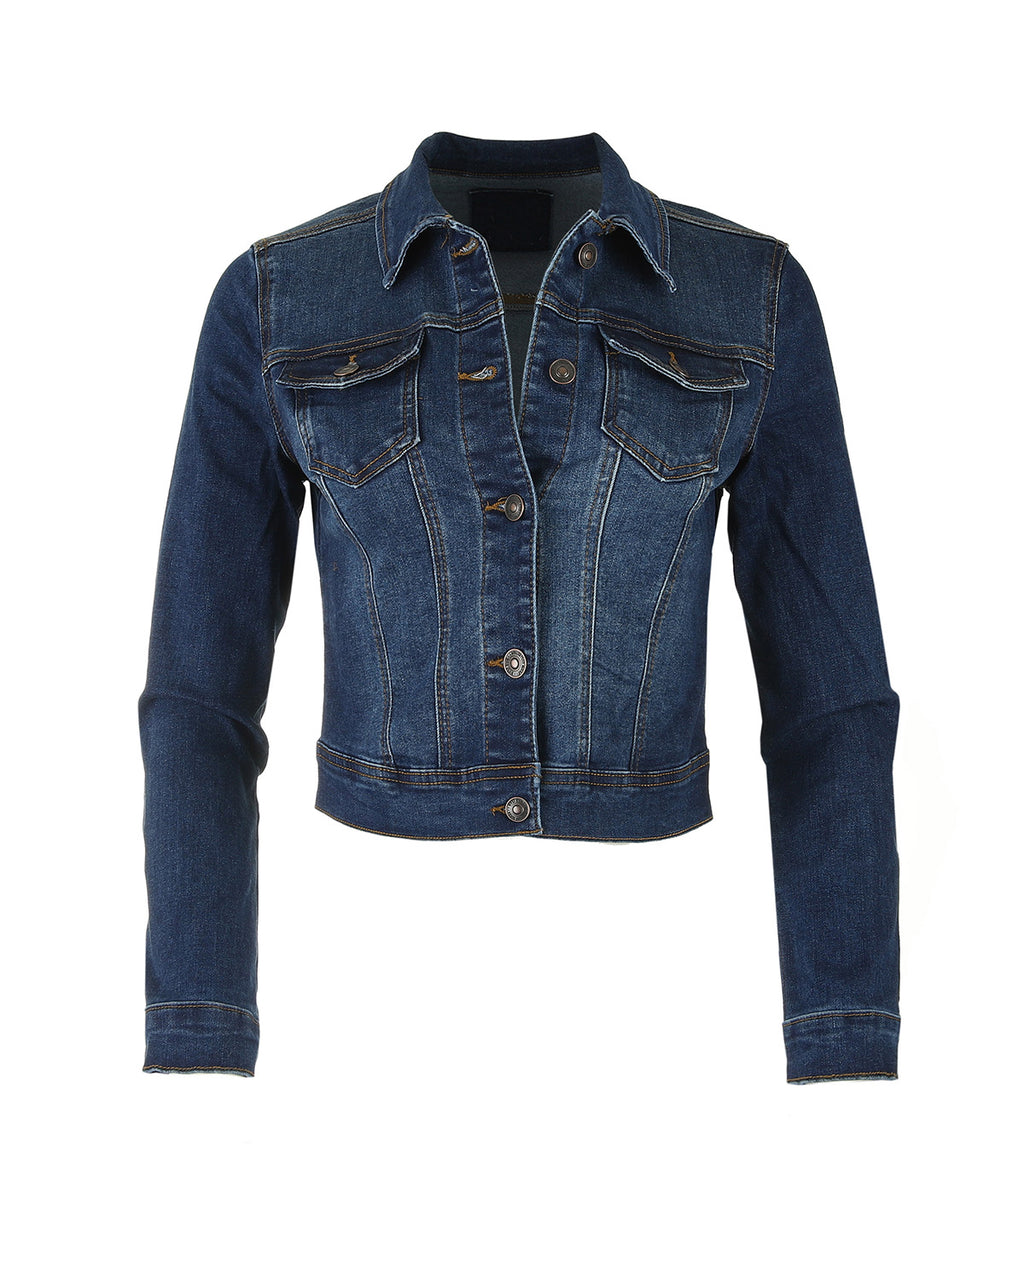 ZIMEGO Women’s Stone Wash Casual Crop Top Button Up Comfort Stretch Denim Jacket